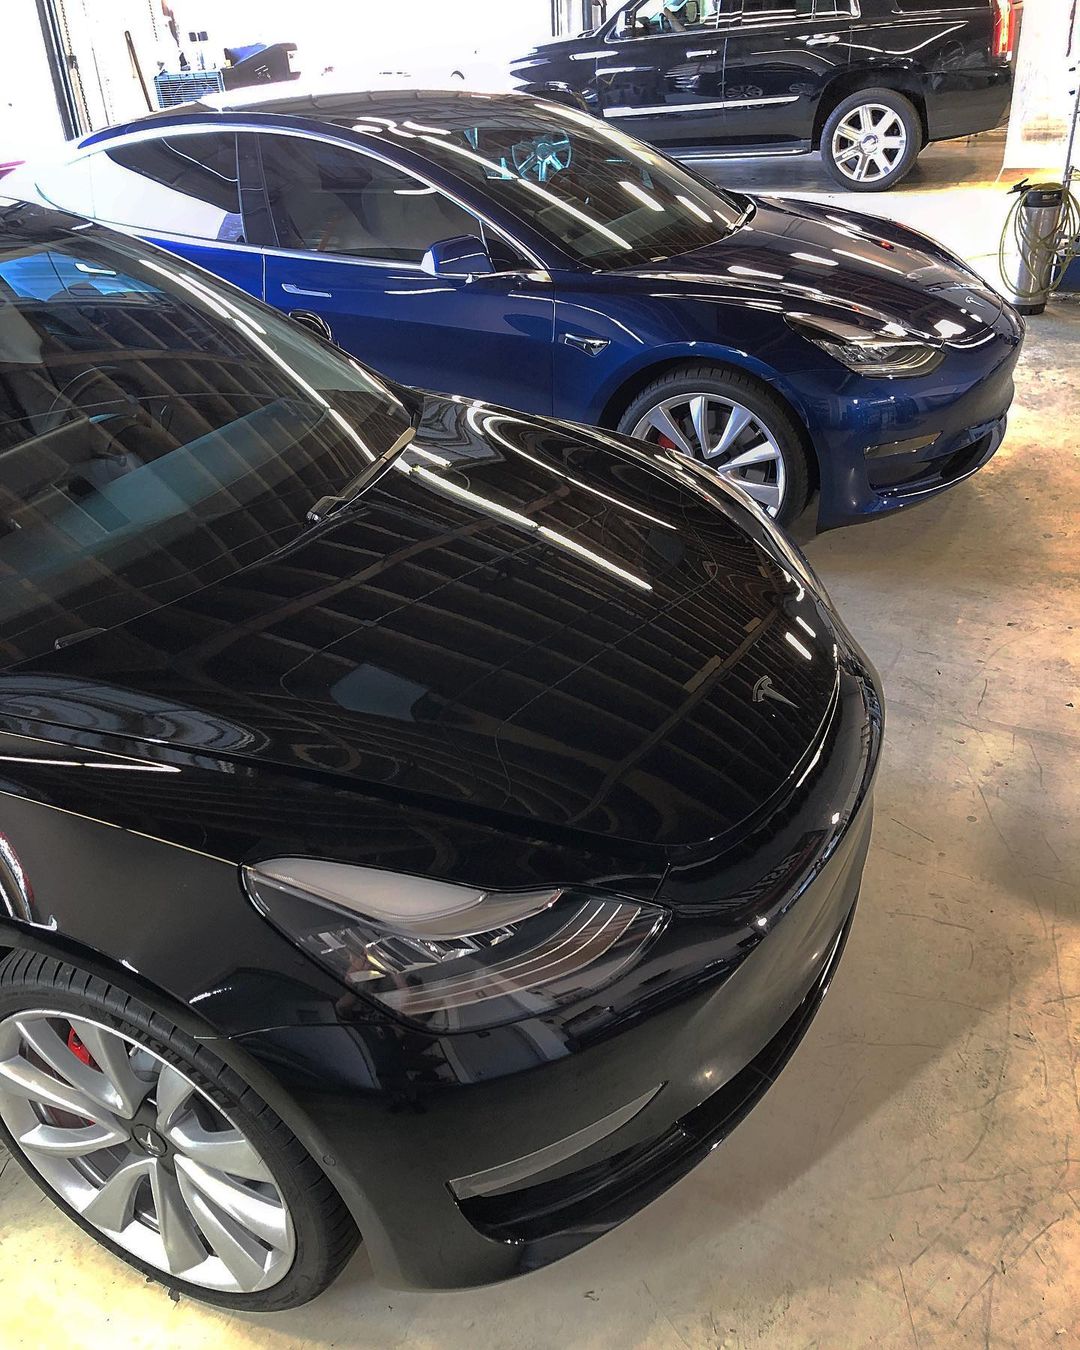 Tesla Model 3s in the shop